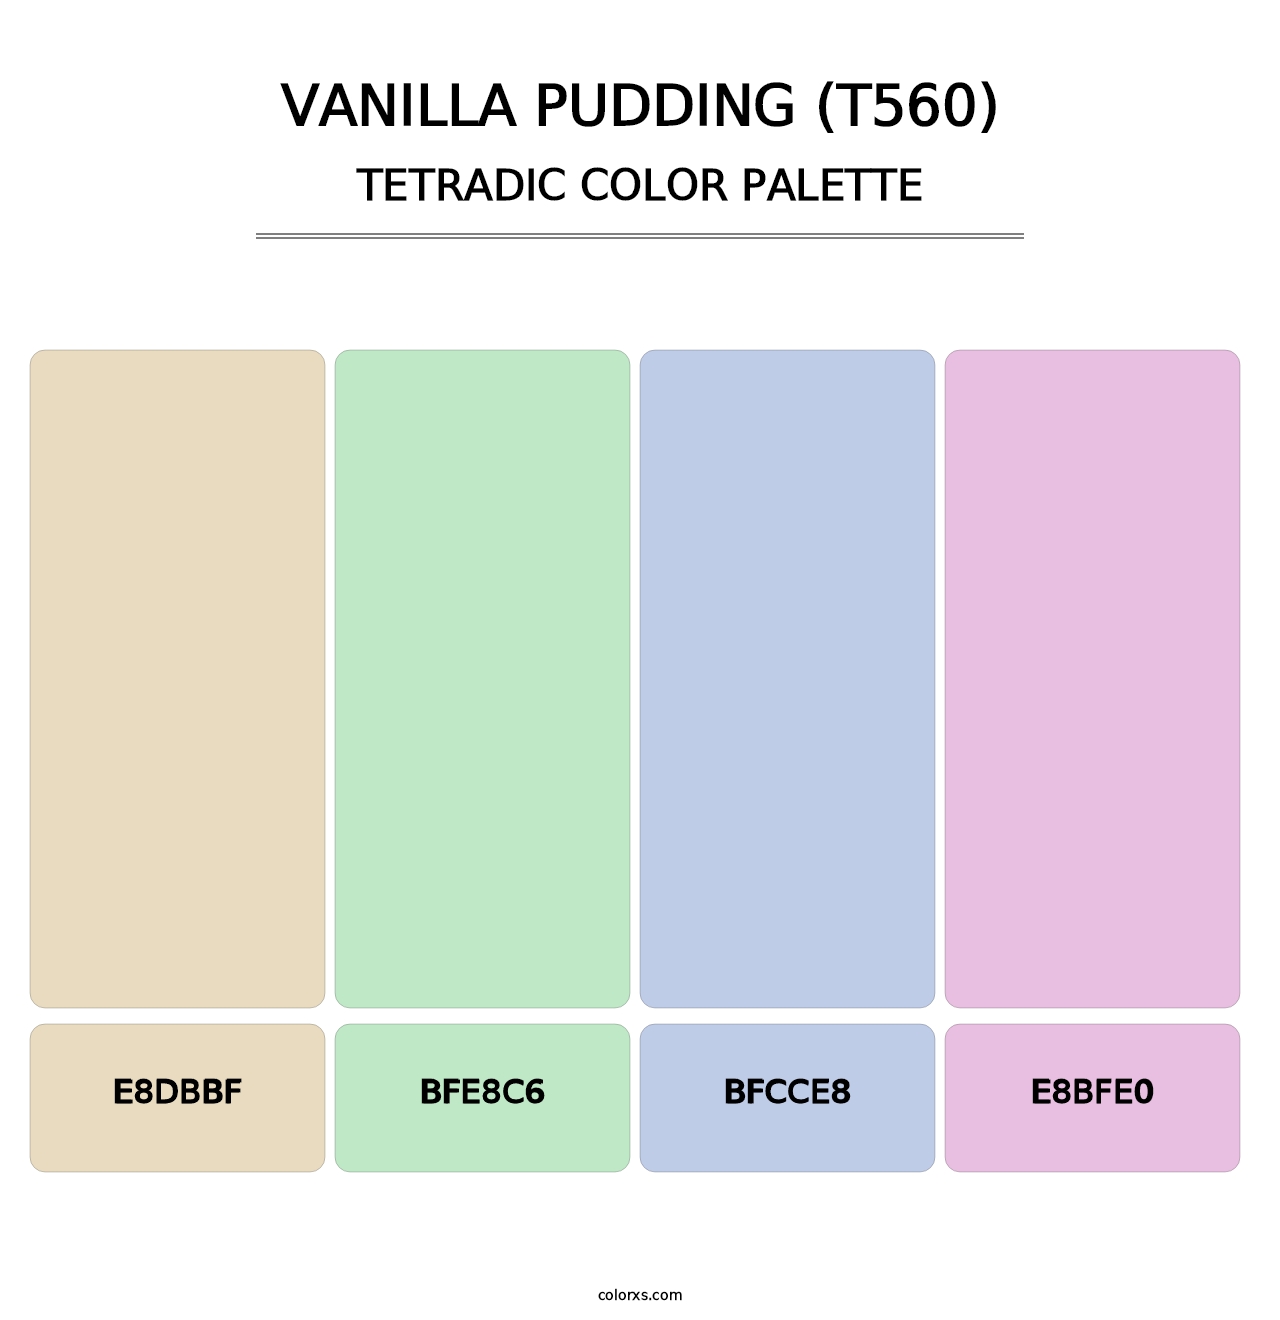 Vanilla Pudding (T560) - Tetradic Color Palette